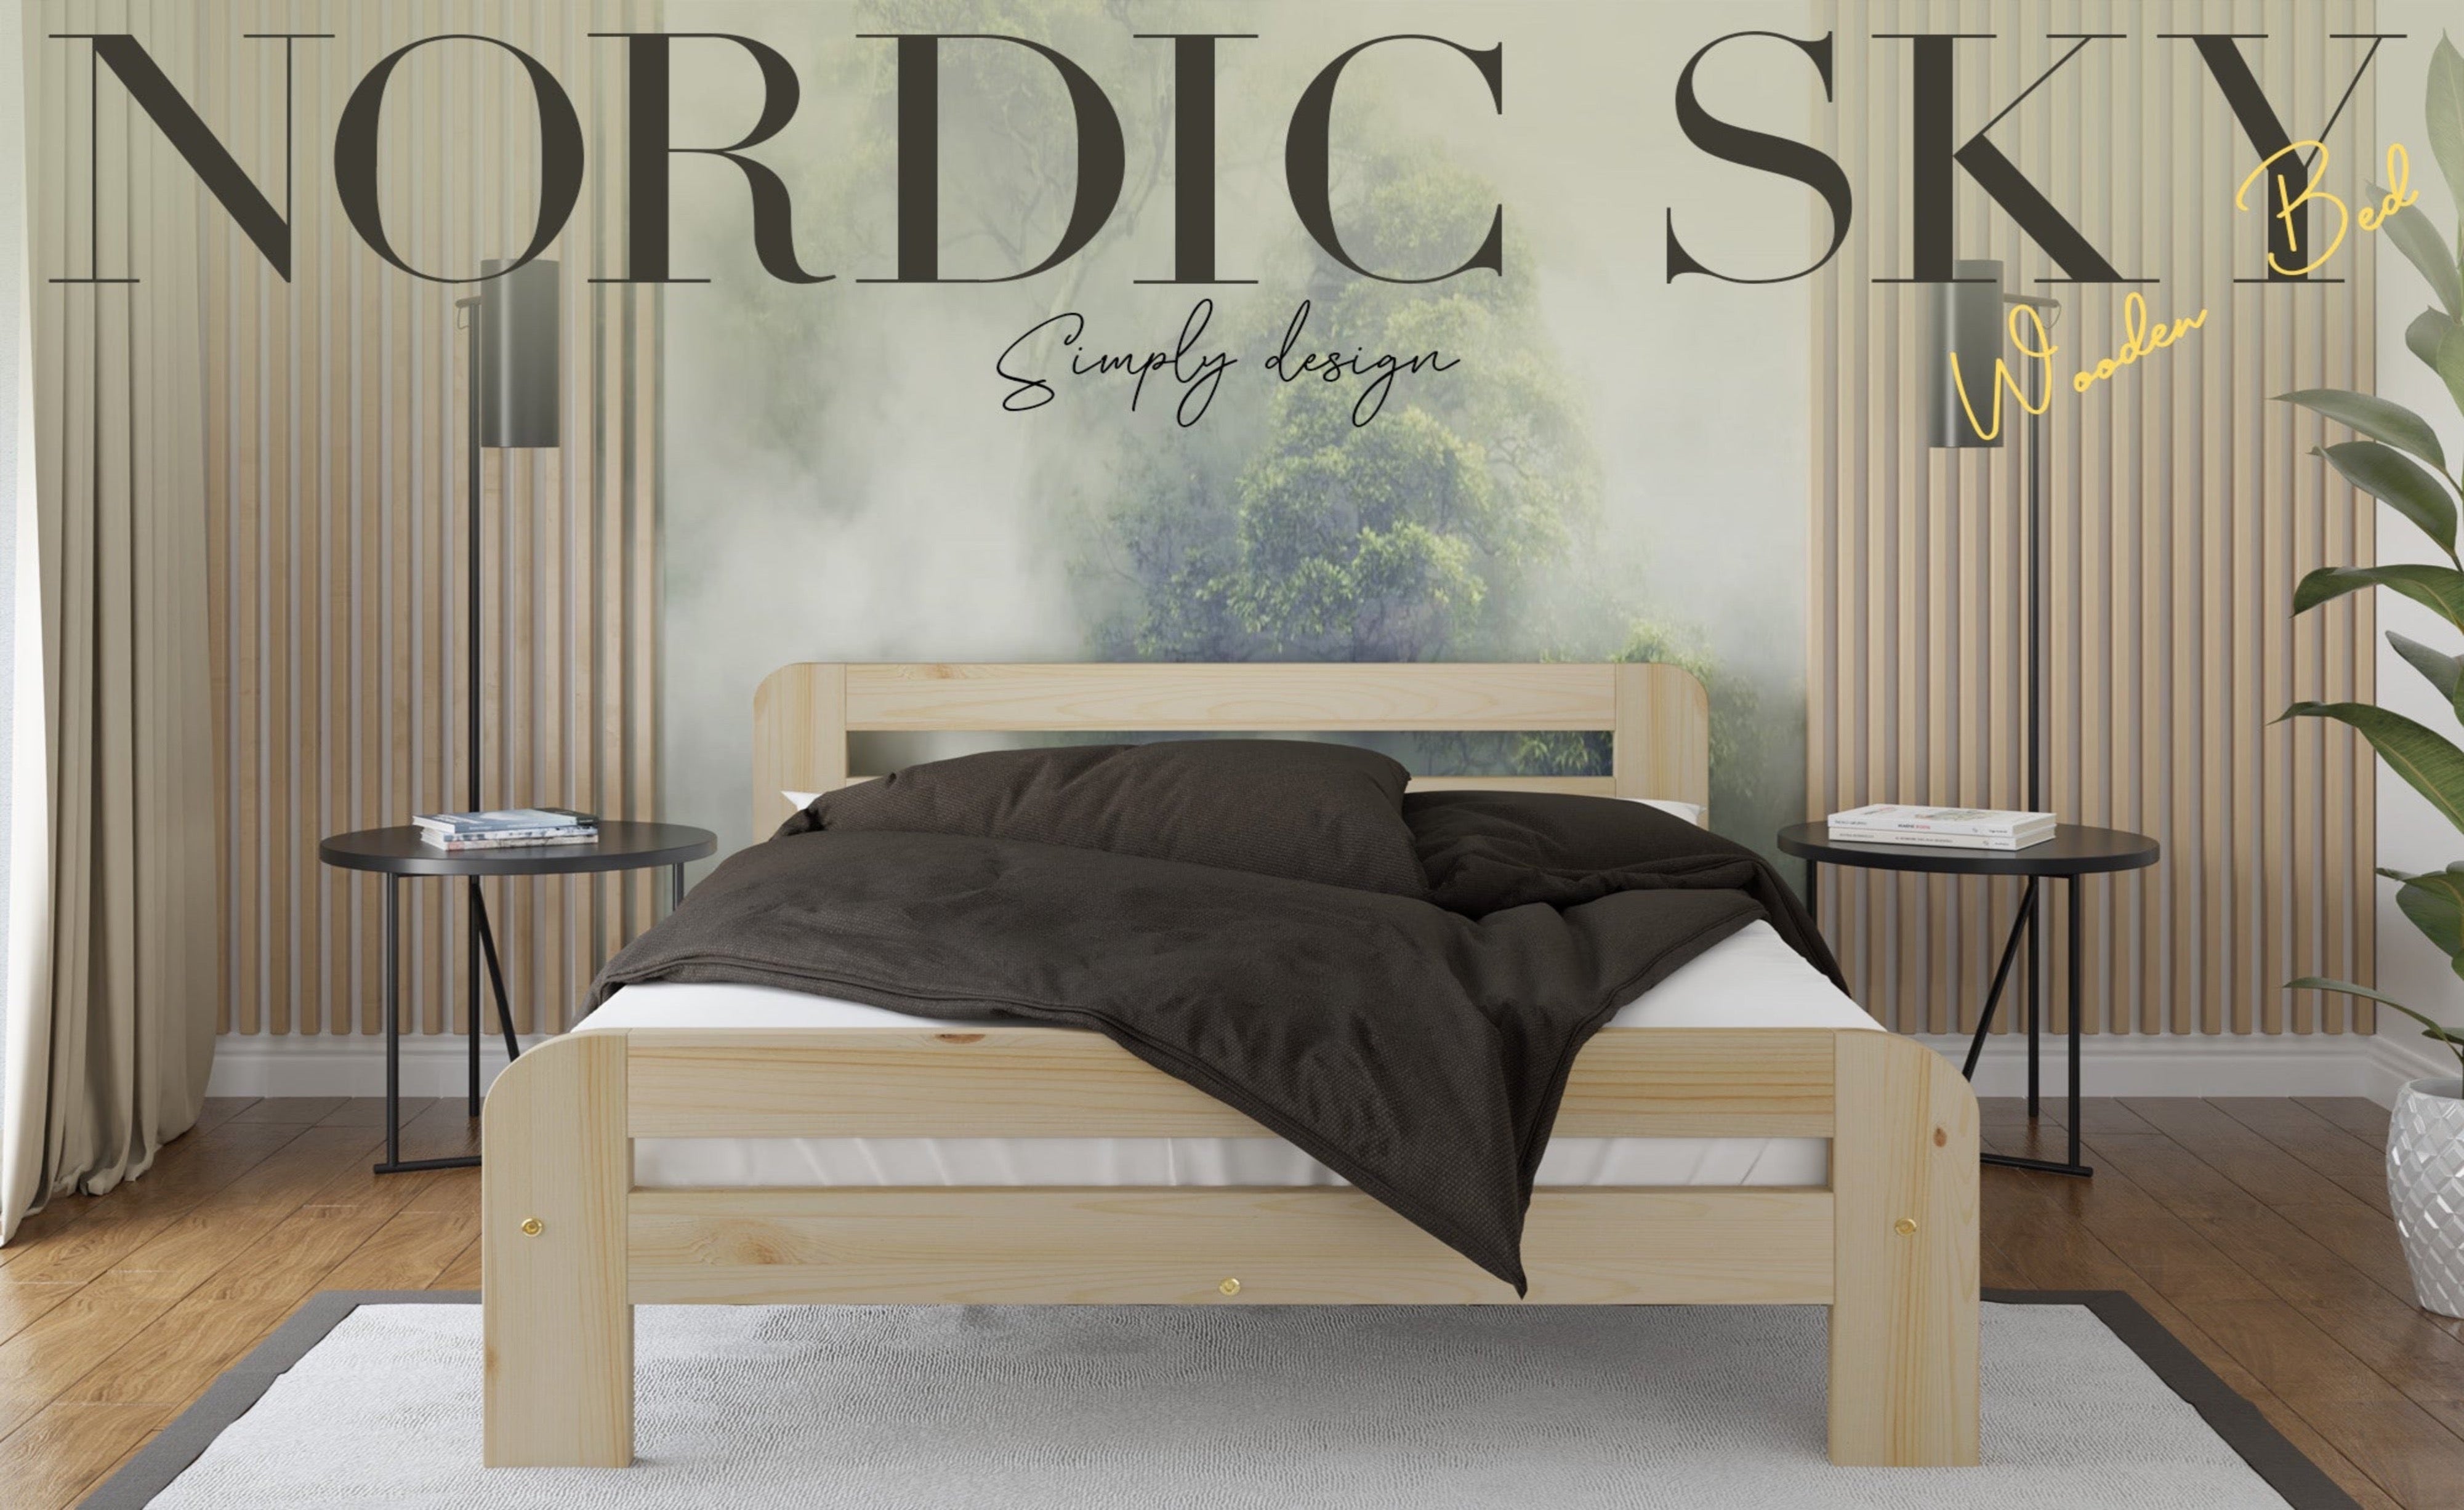 Wooden bed frame Nordic Sky (F2)